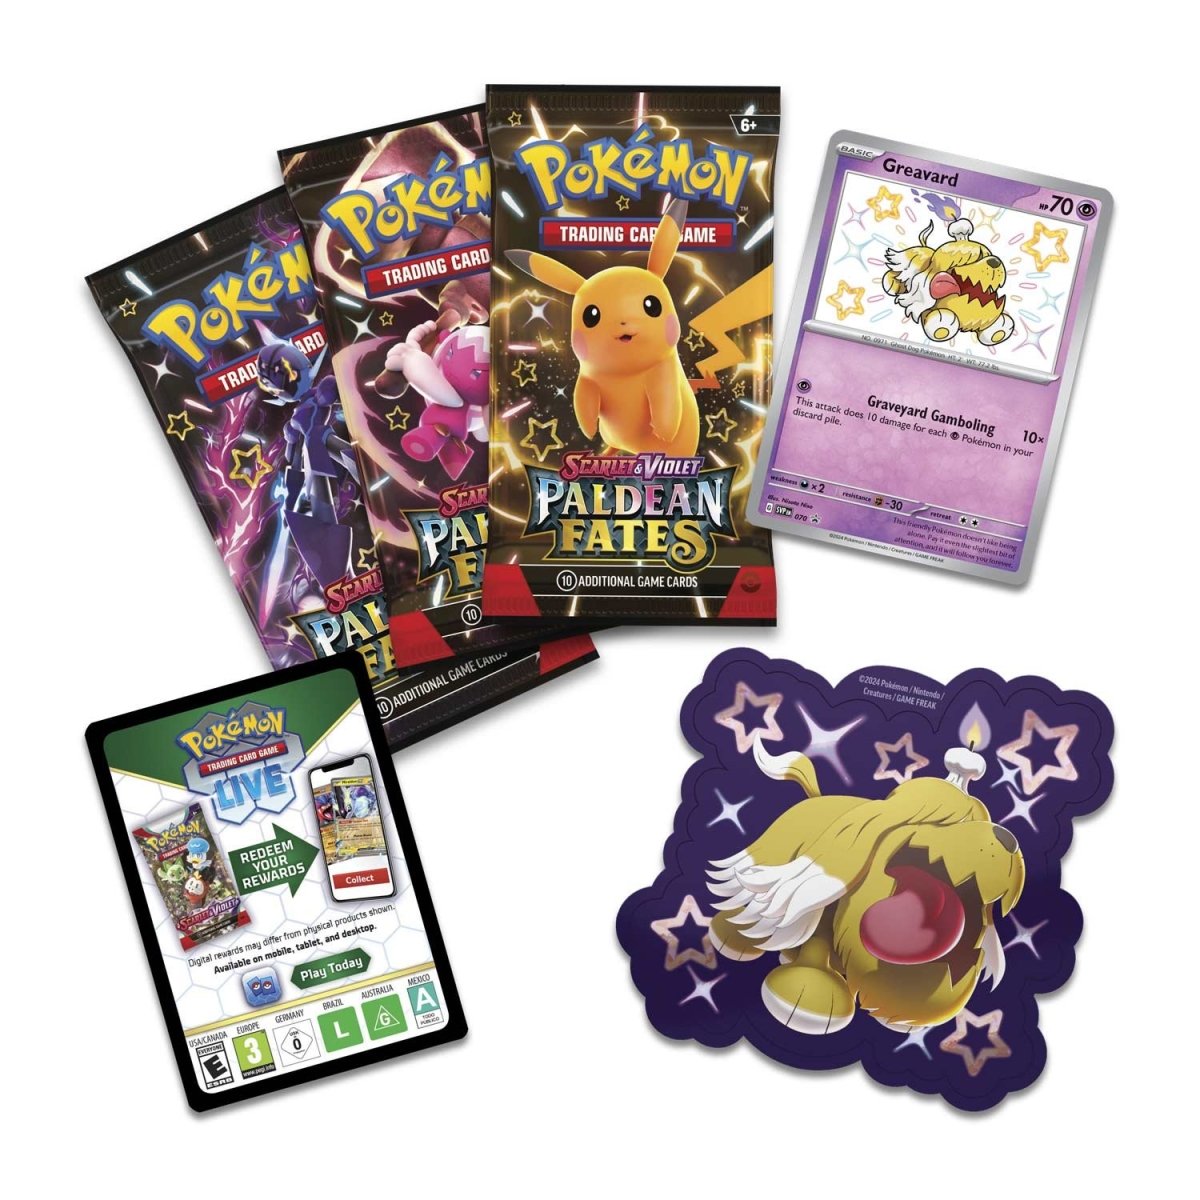 Pokemon Trading Card Game: Paldean Fates Tech Sticker Collection